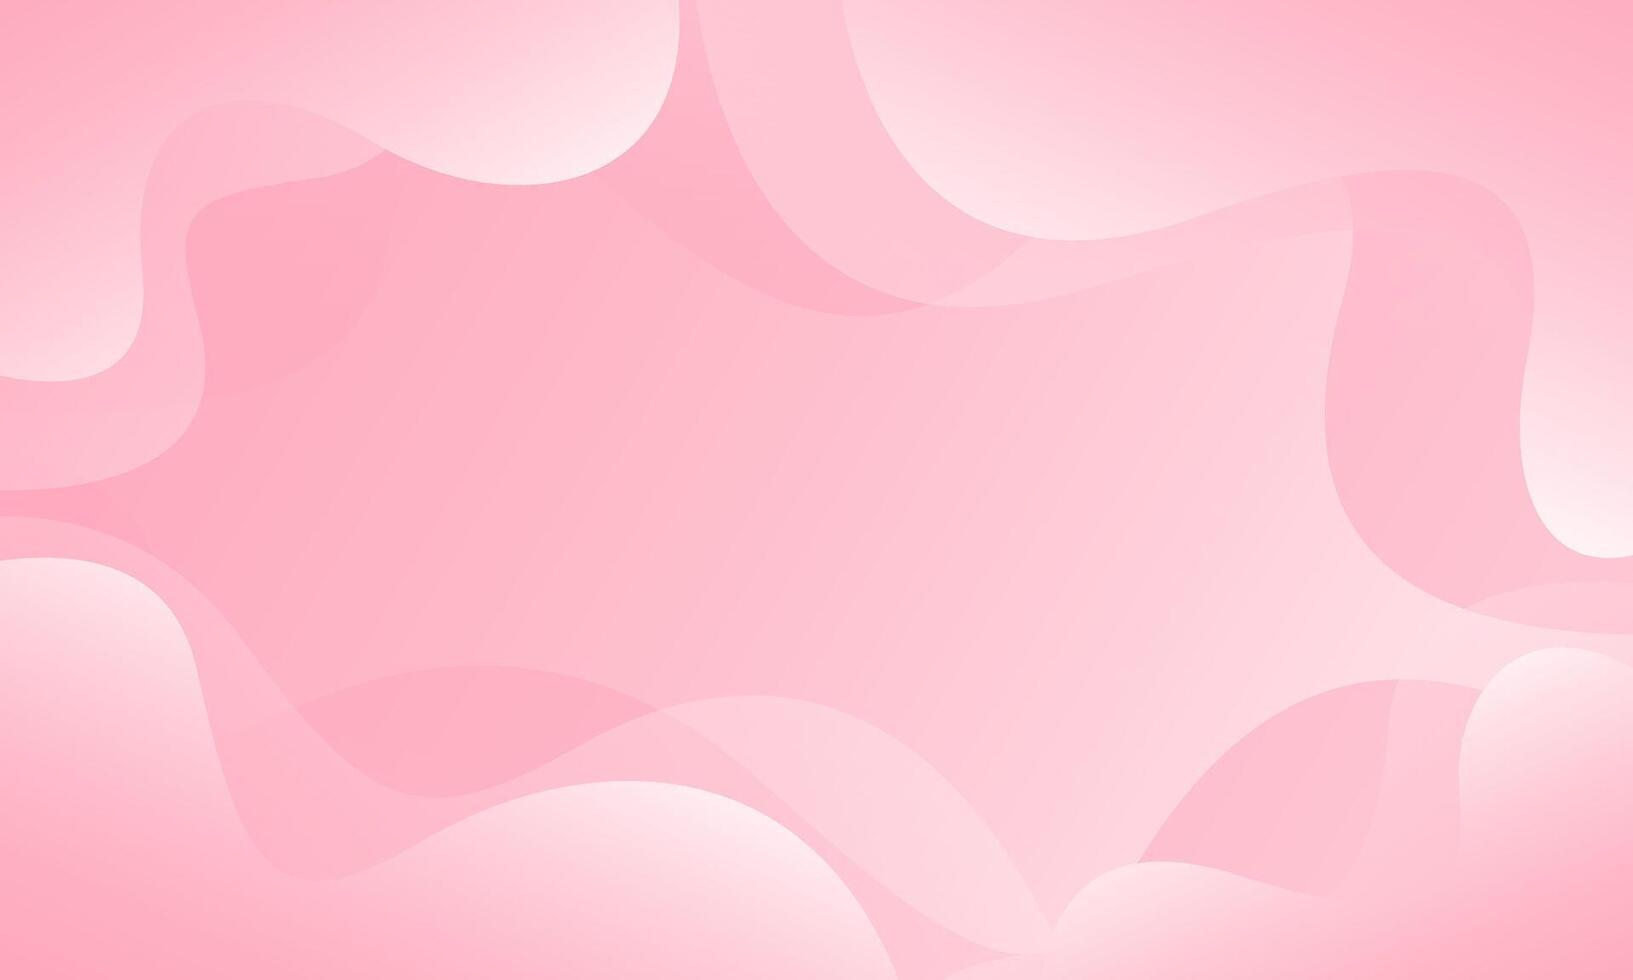 brilhante Rosa abstrato curva fundo, Rosa beleza dinâmico papel de parede com onda formas. modelo bandeira fundo para beleza produtos, vendas, Publicidades, Páginas, eventos, rede, e outras vetor